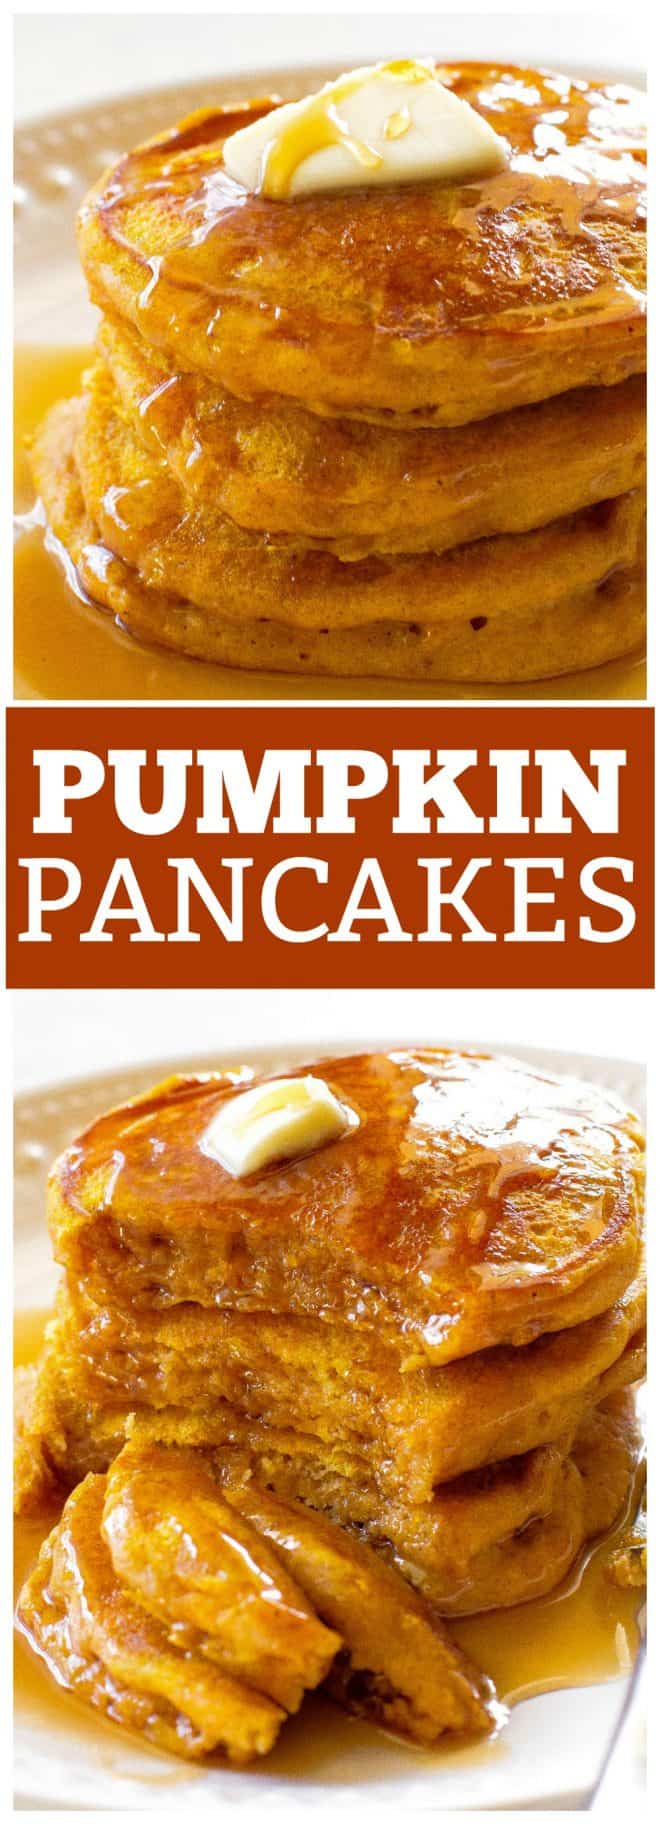 fb image - Pumpkin Pancakes